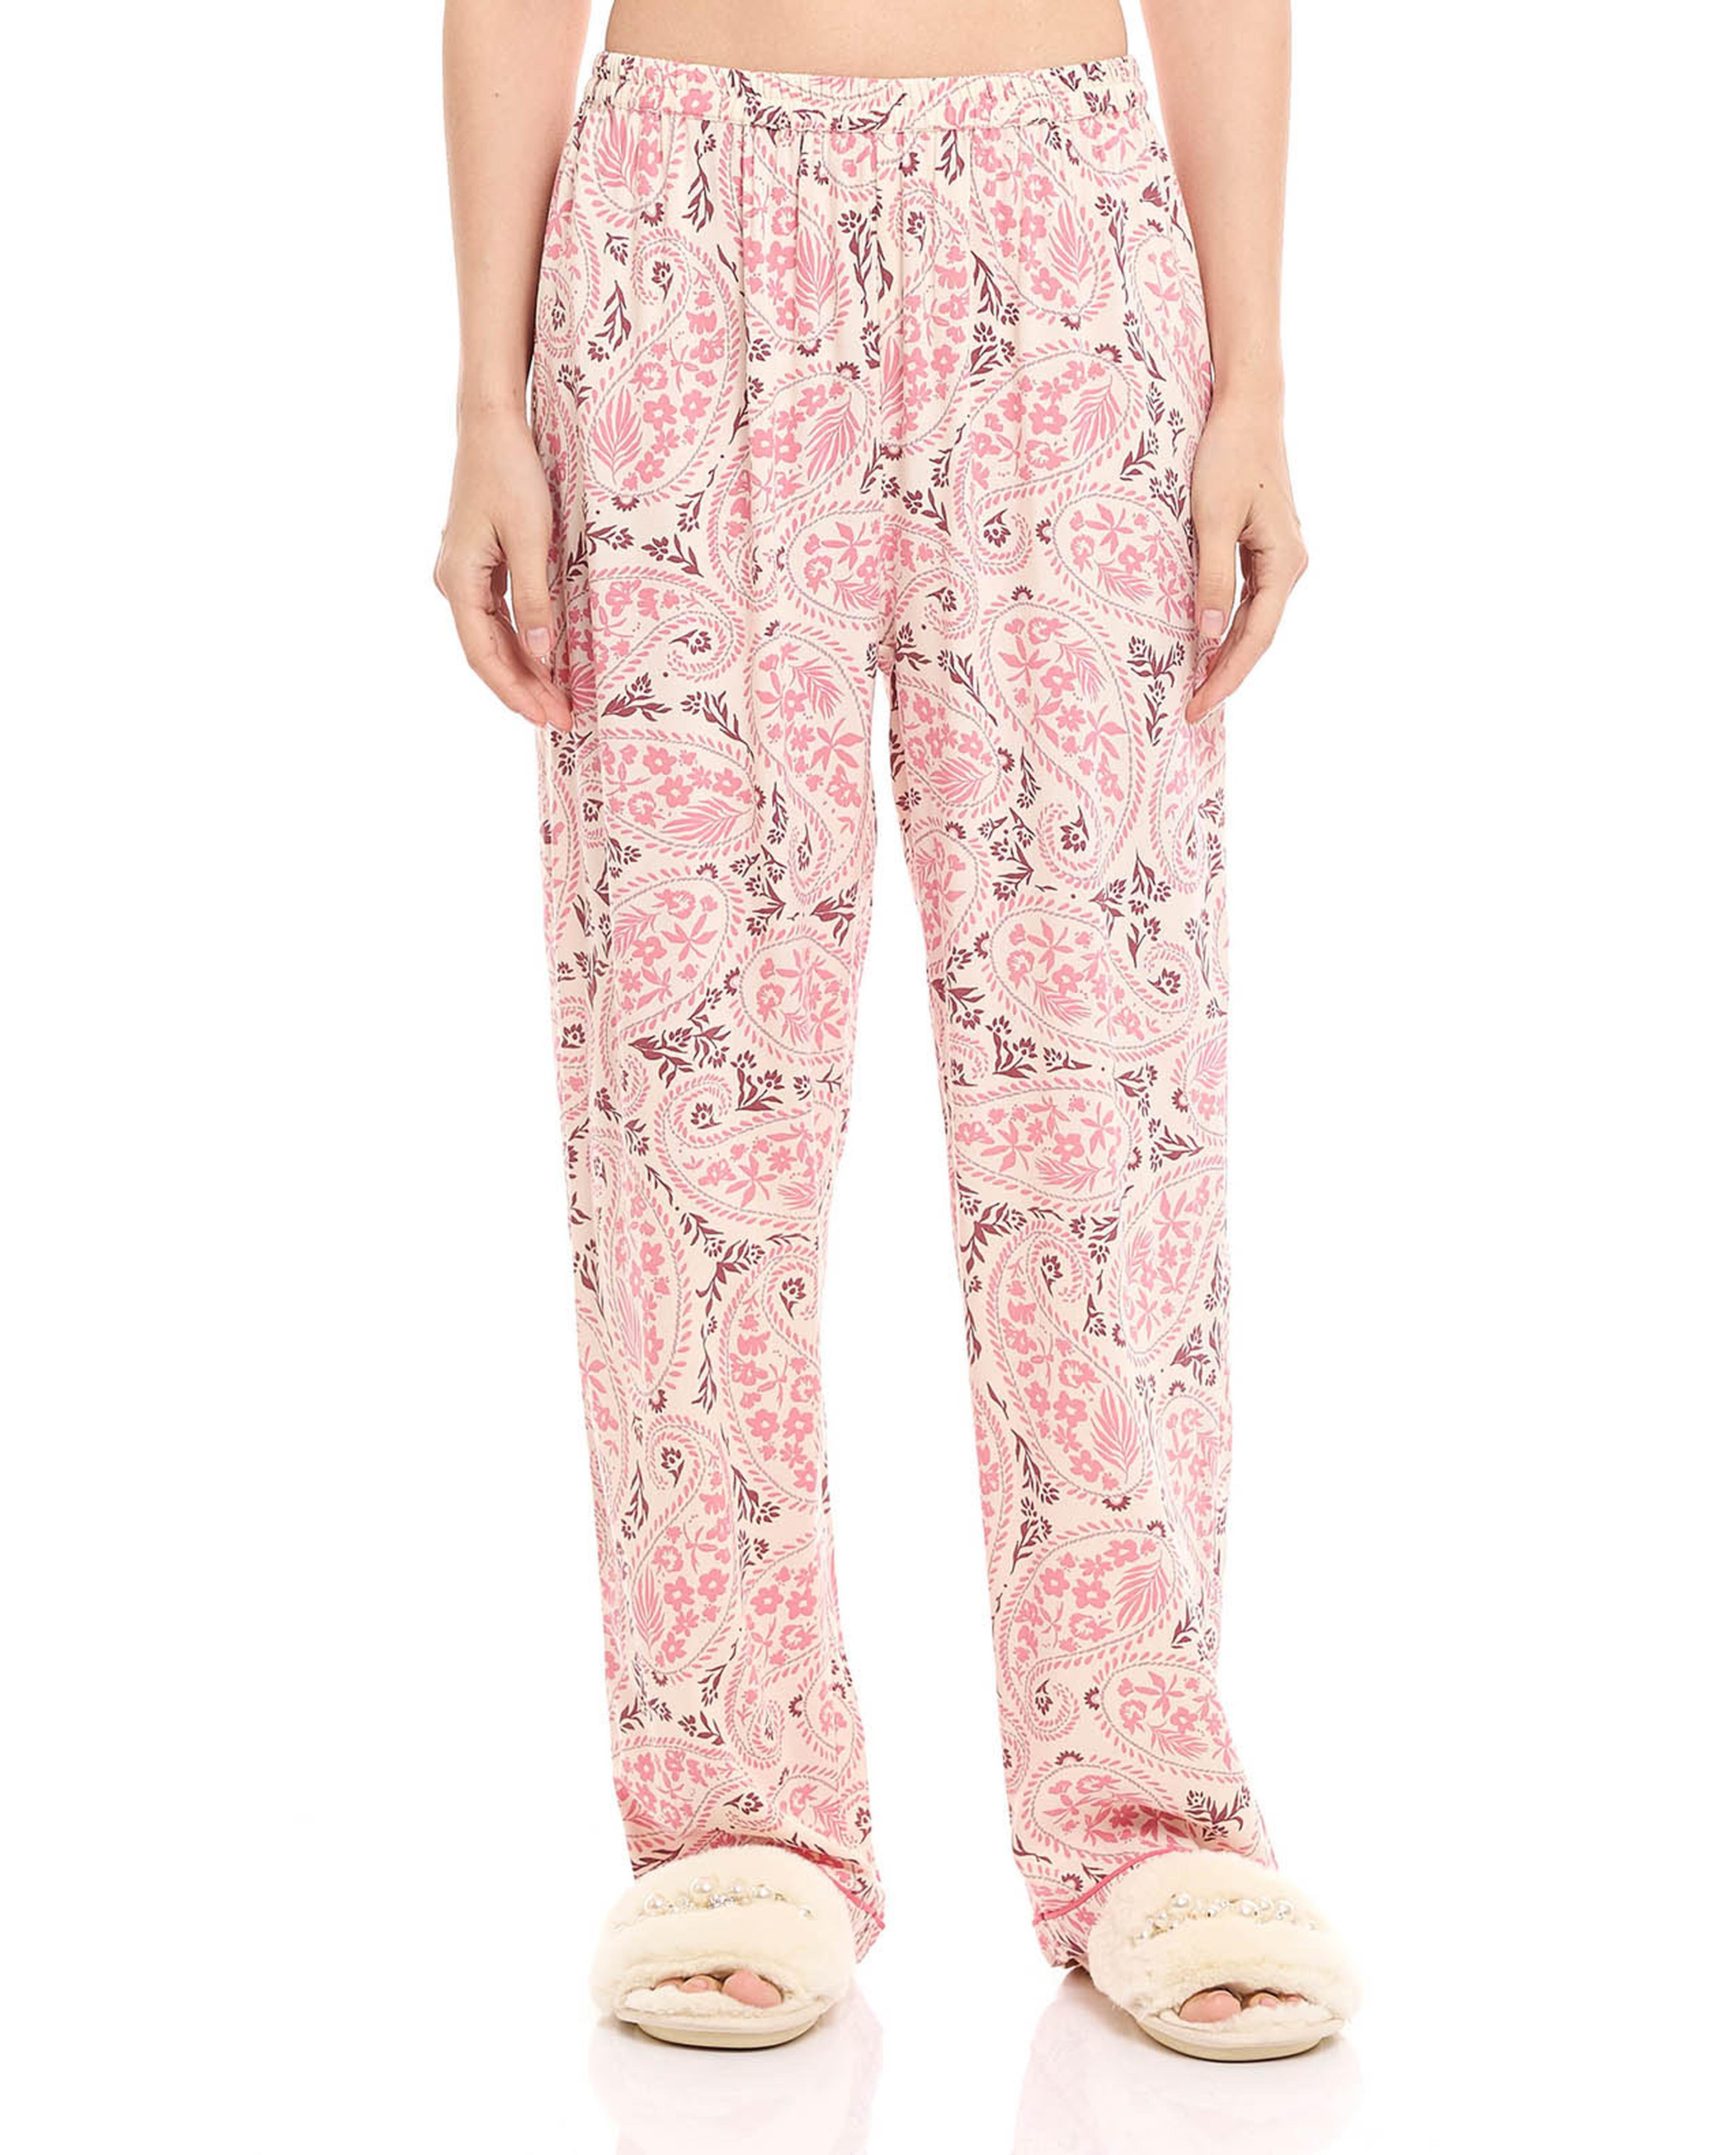 Paisley Print Pyjama Set